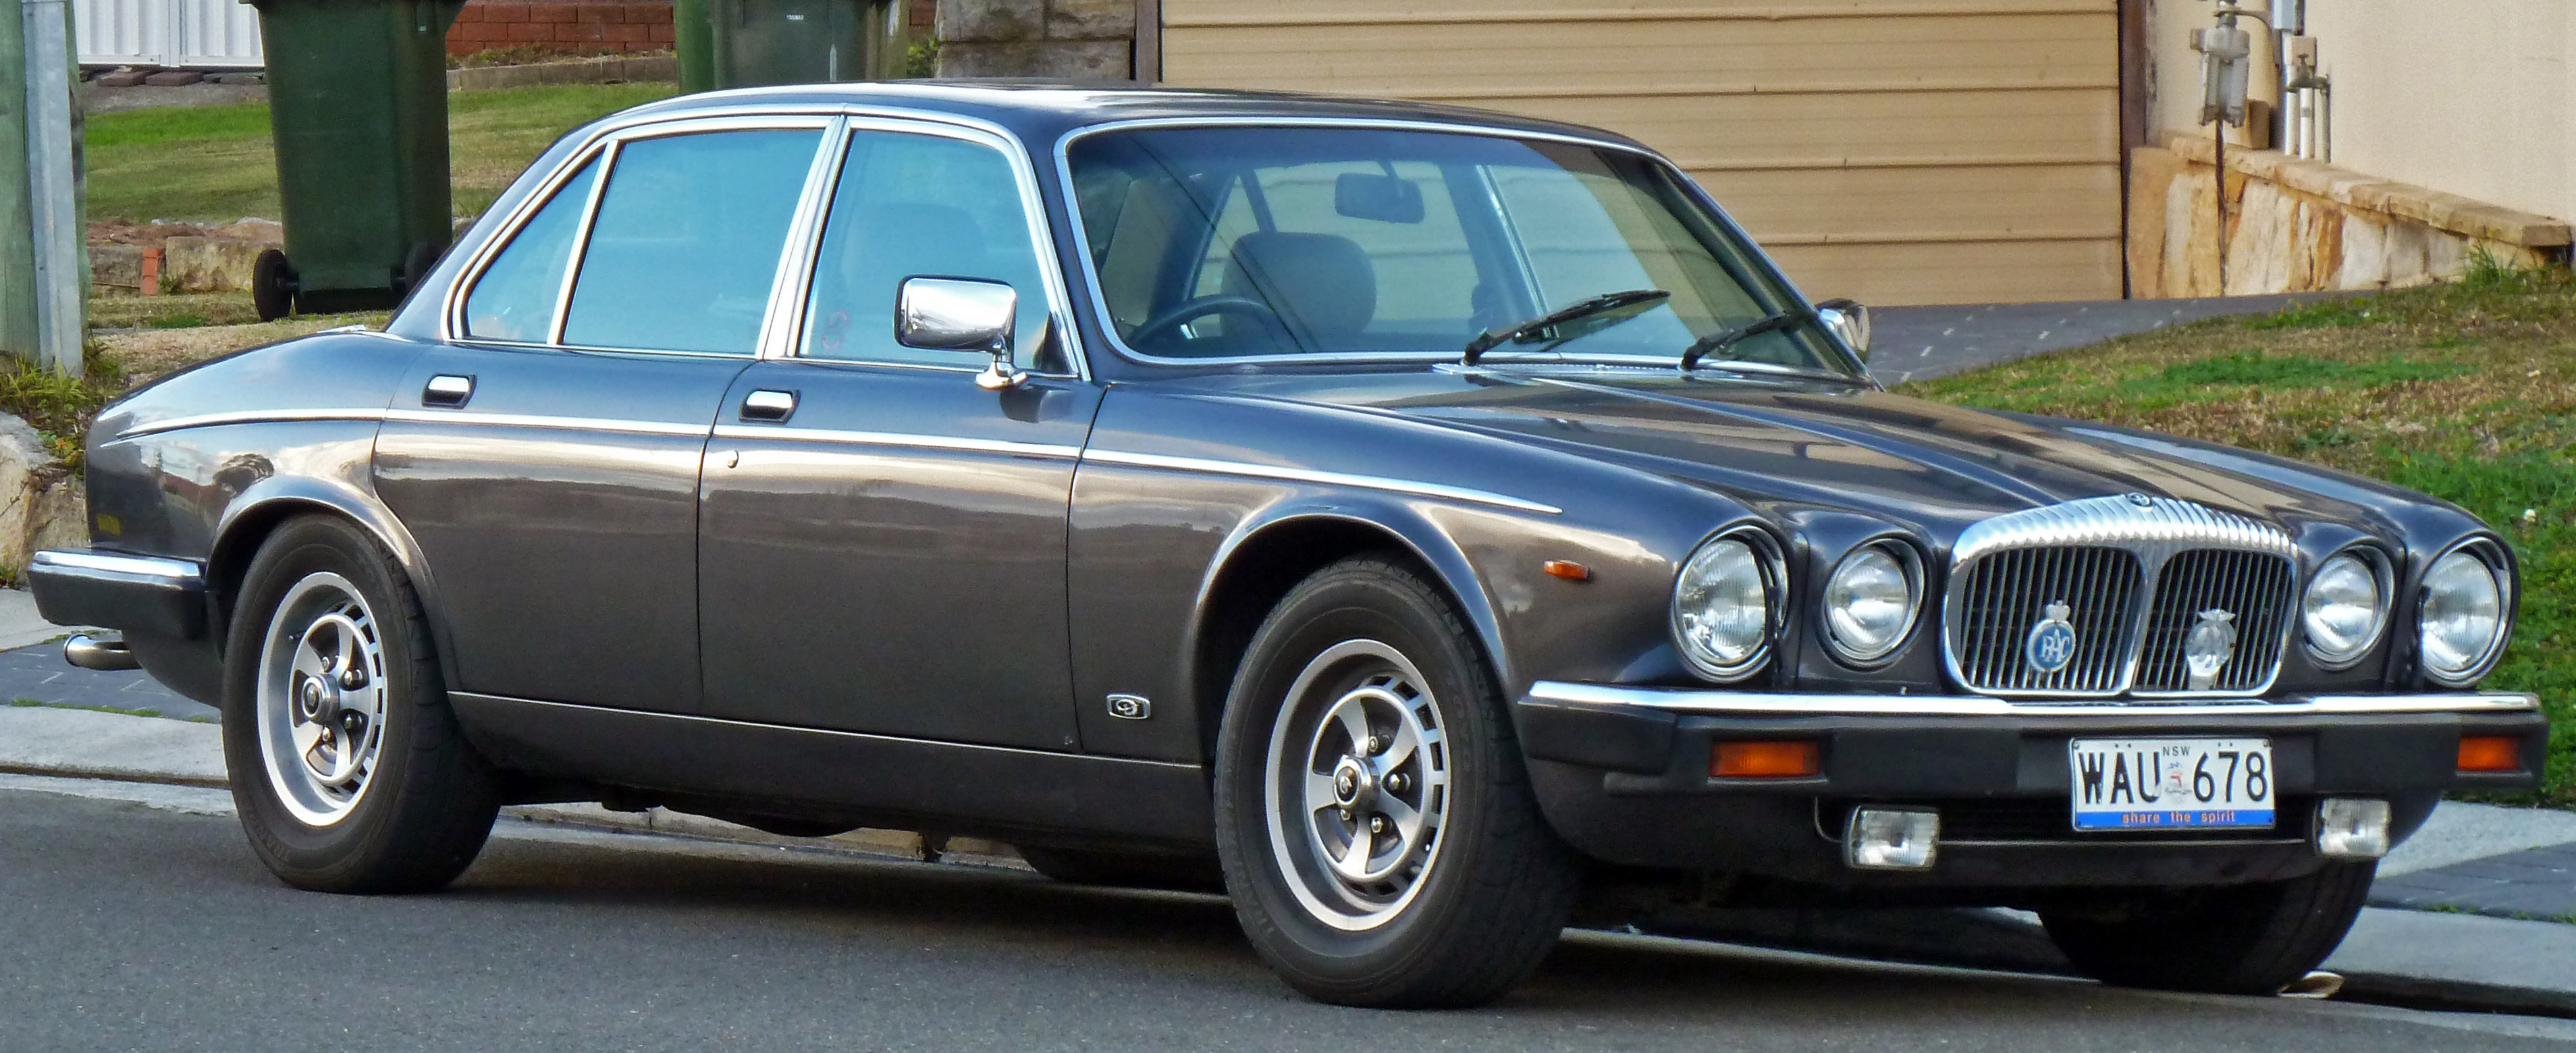 File:1986-1988 Daimler Double Six sedan 01.jpg - Wikimedia Commons